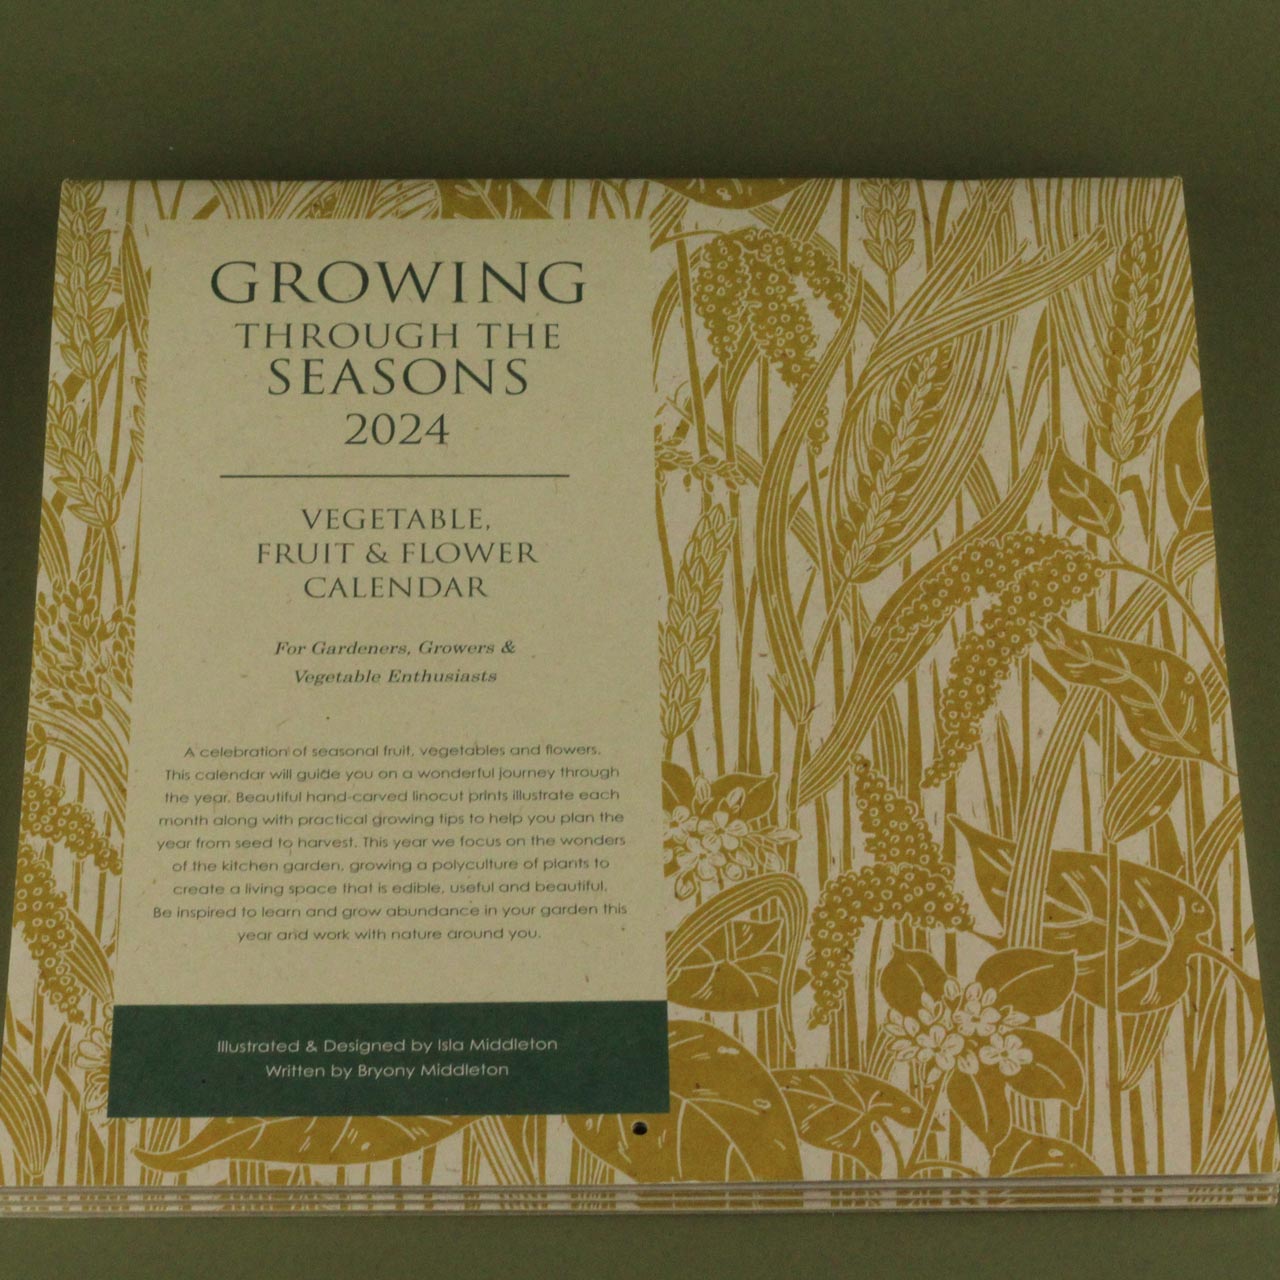 Growing-through-the-seasons-2024-calender